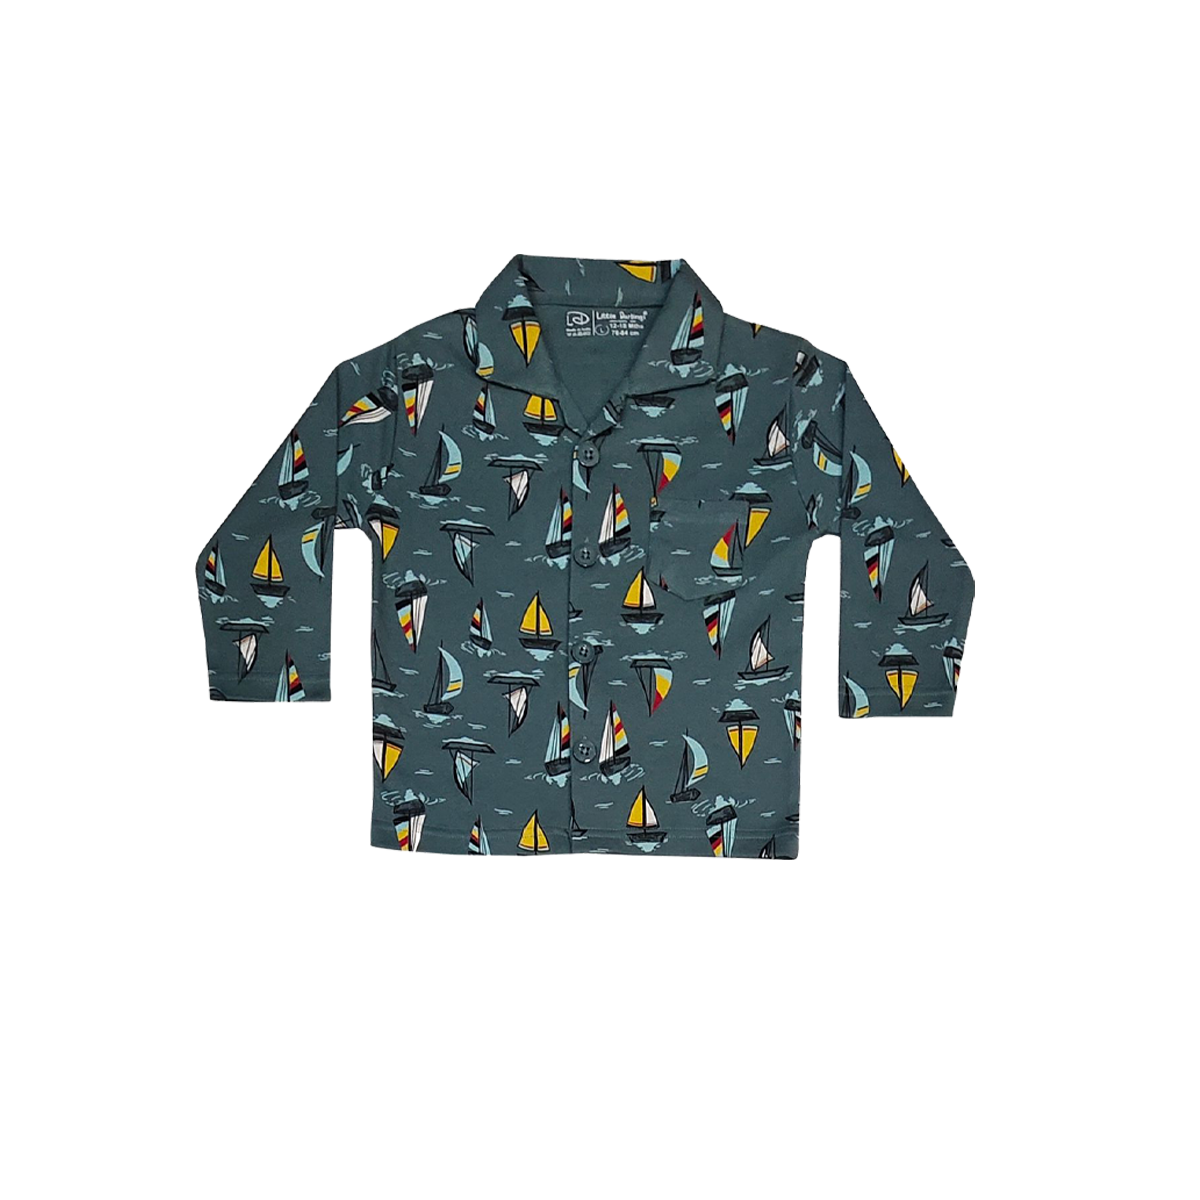 Full Sleeves Baby Little Sailors Printed Pajamas / Night Suit  for Baby/Kids - Dark Green